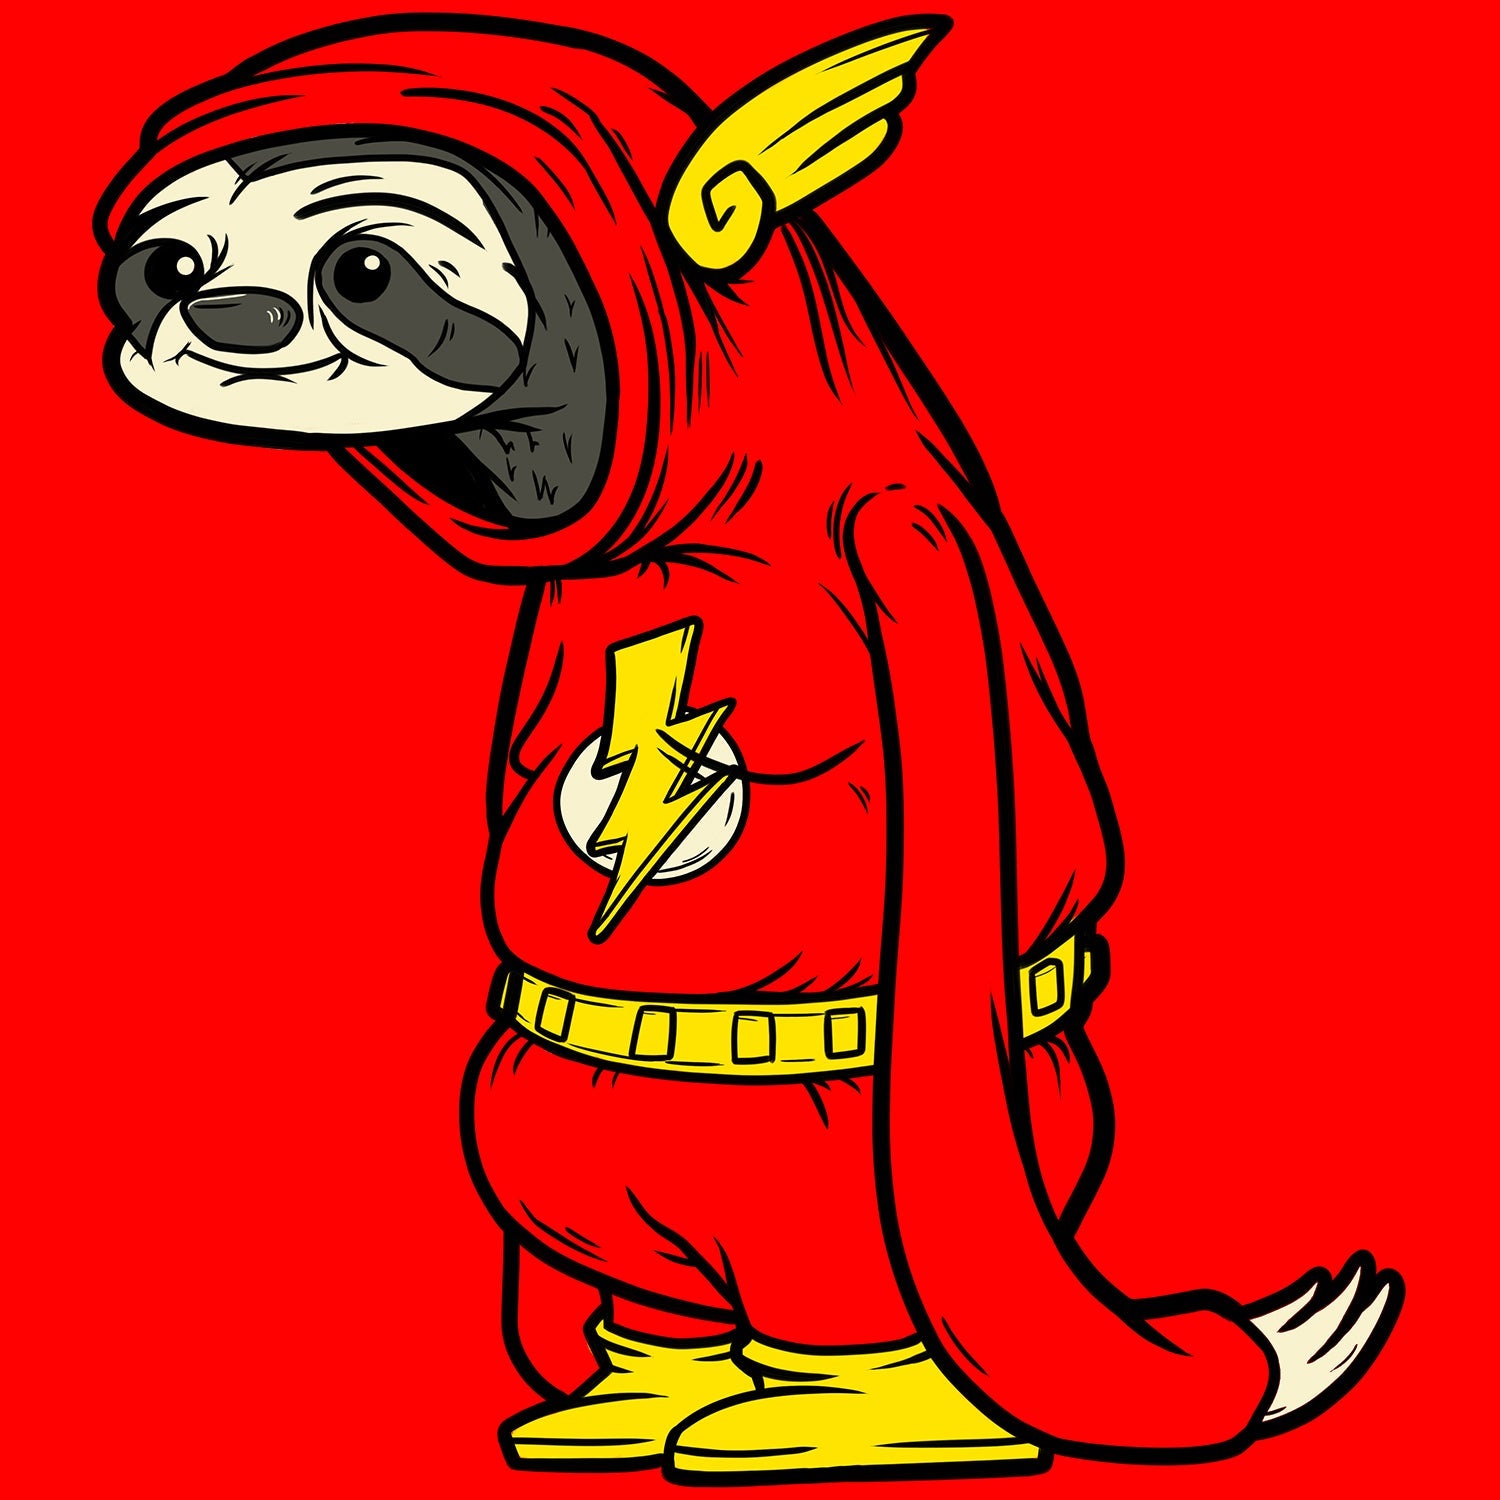 Flash Sloth Kids T Shirt